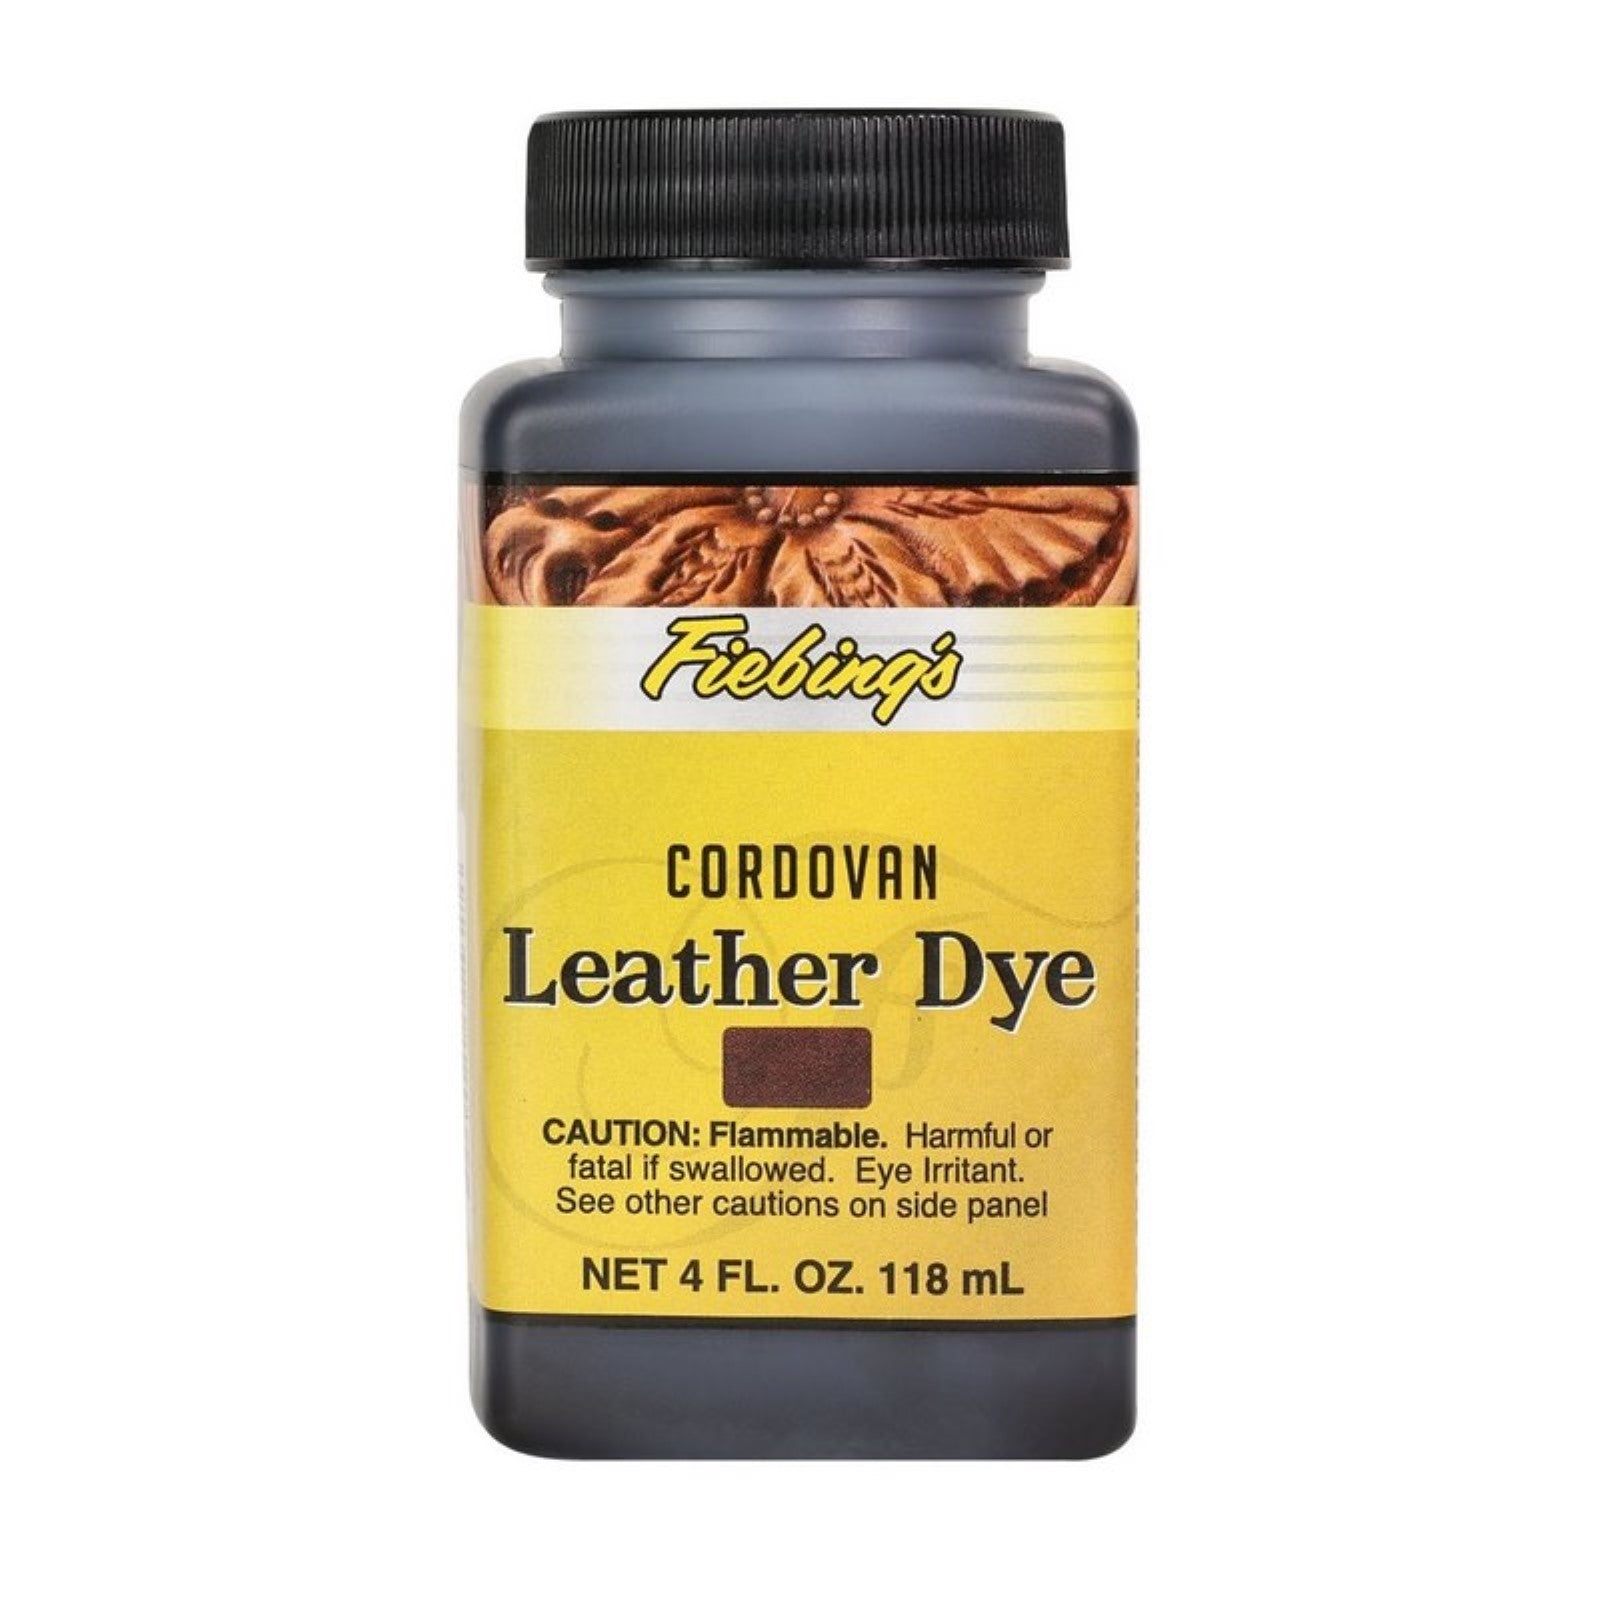 Fiebings Leather Dye, 4 oz, Cordovan | The Leather Guy